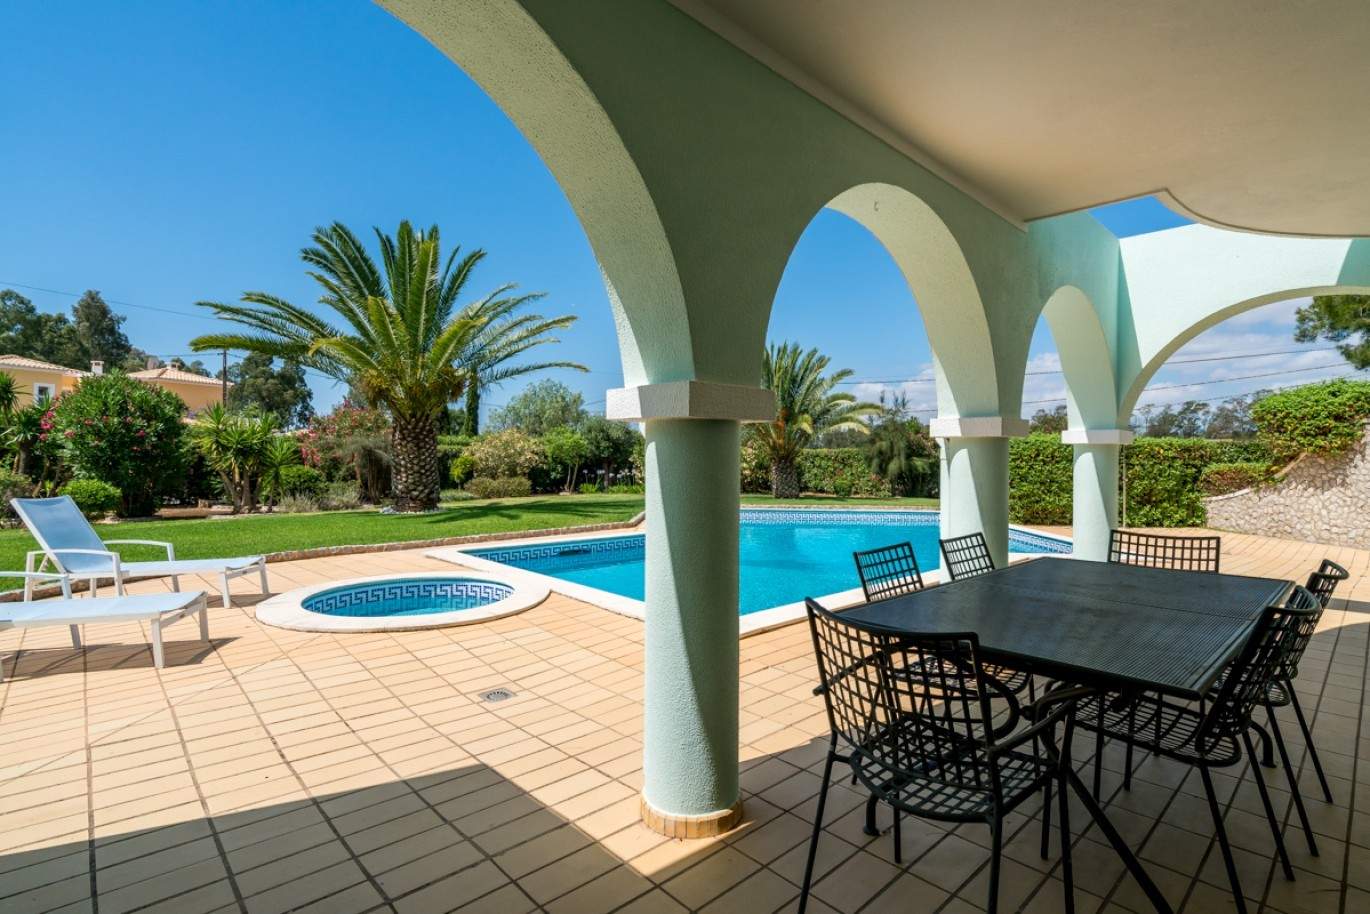 Sale of villa with garden and pool in Penina, Alvor, Algarve, Portugal_83413